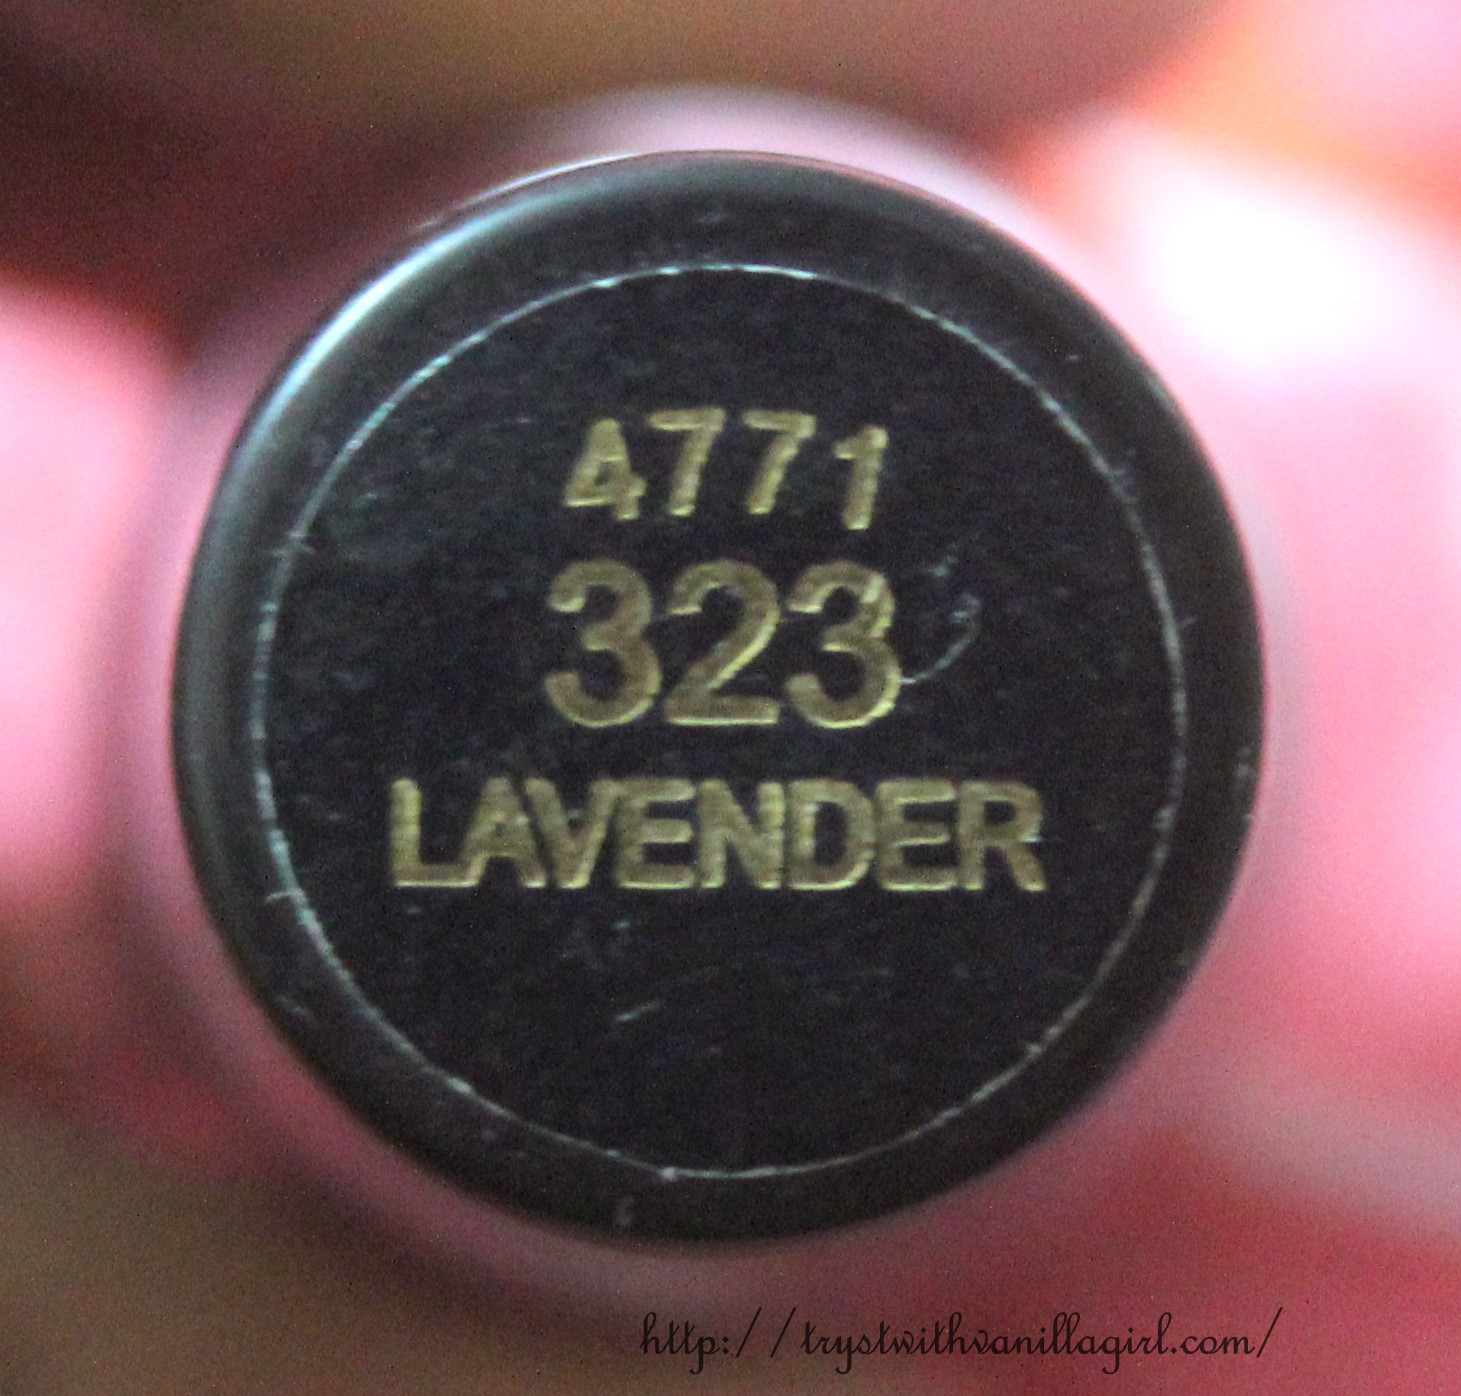 Revlon Professional Nail Enamel Lavender 323 Review,NOTD